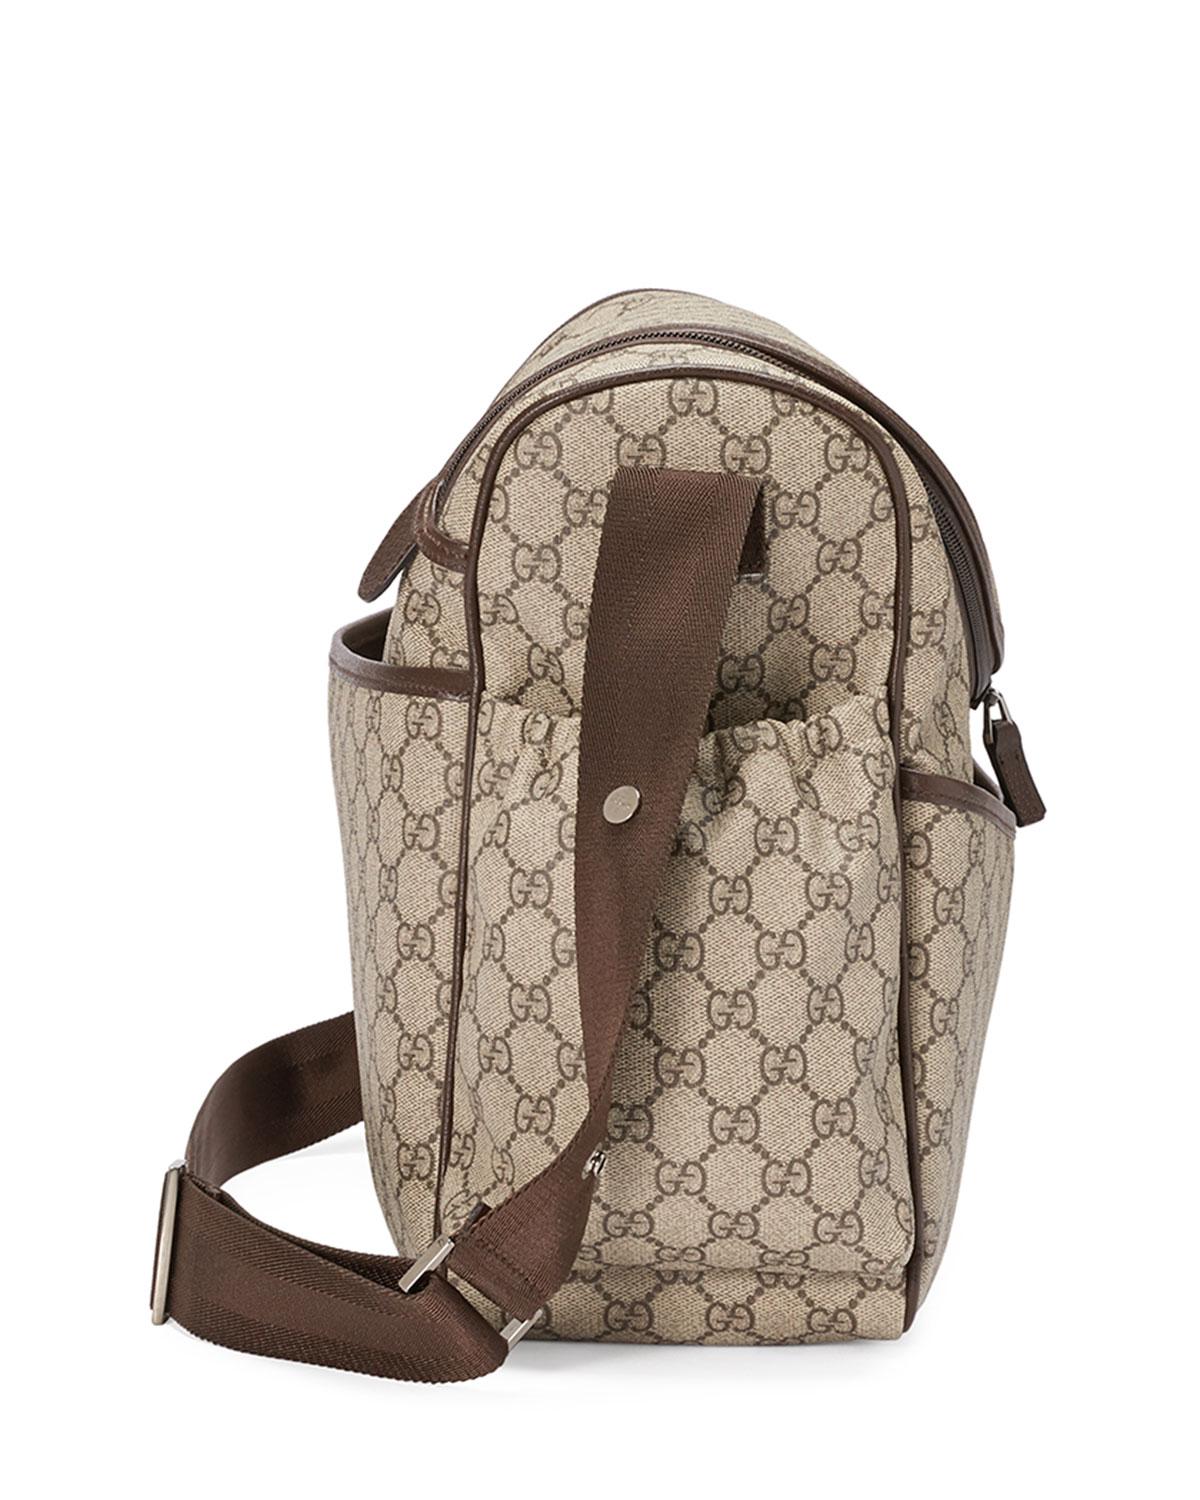 Gucci Basic GG Supreme Canvas Diaper Bag in Beige (Natural) - Lyst